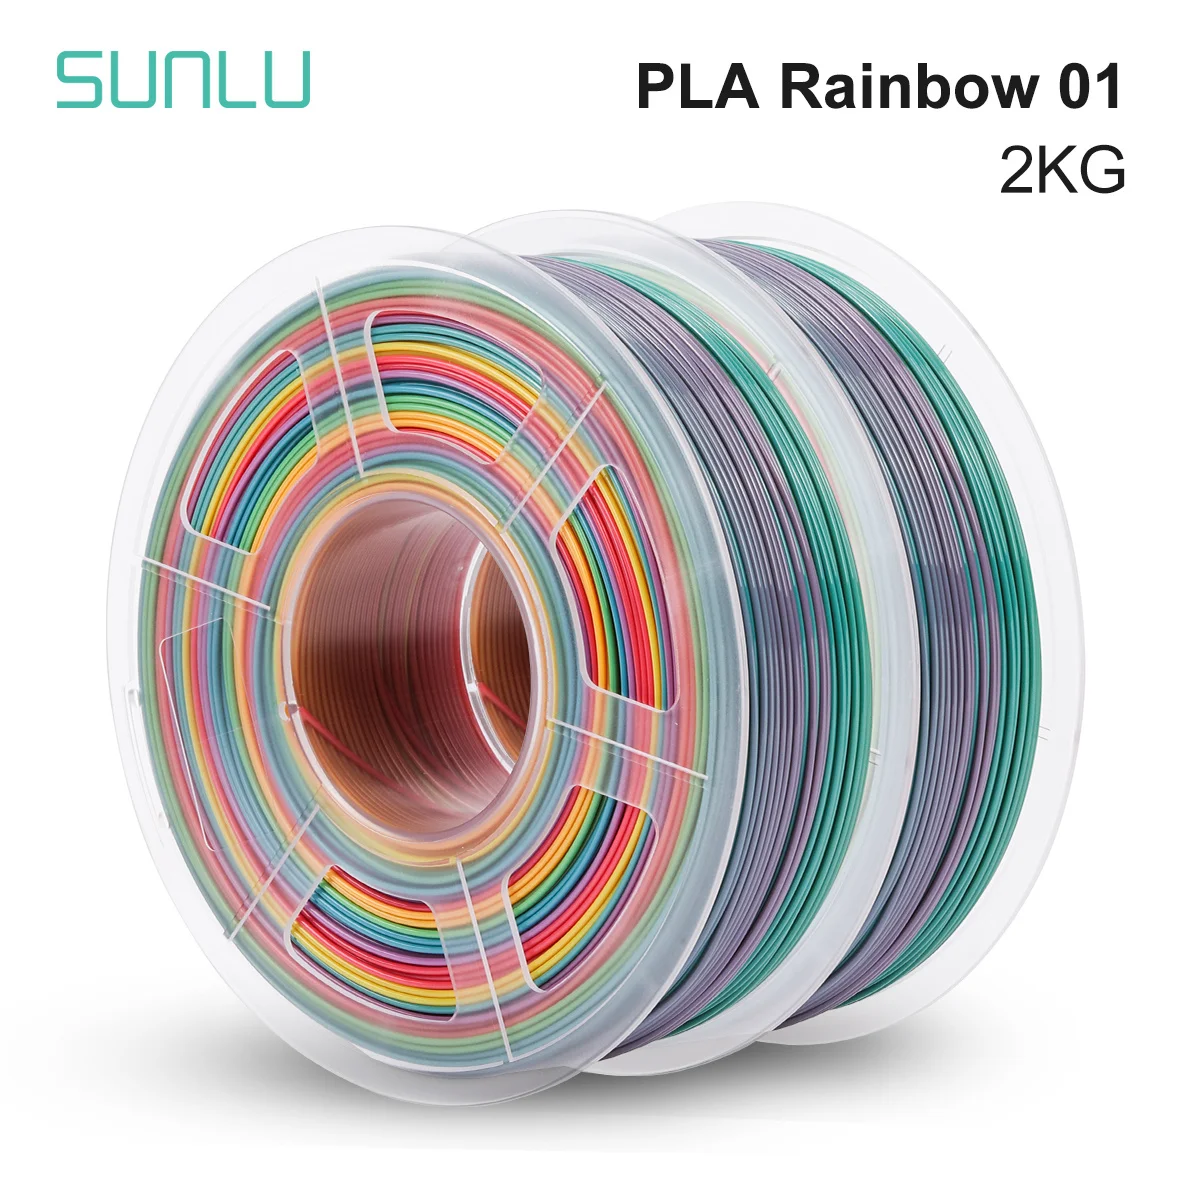 

SUNLU PLA/SILK Rainbow Filament 1.75MM 1KG*2Rolls Bright Color No Bubble Non-Toxic Eco-Friendly For All Types Of FDM 3D Printers